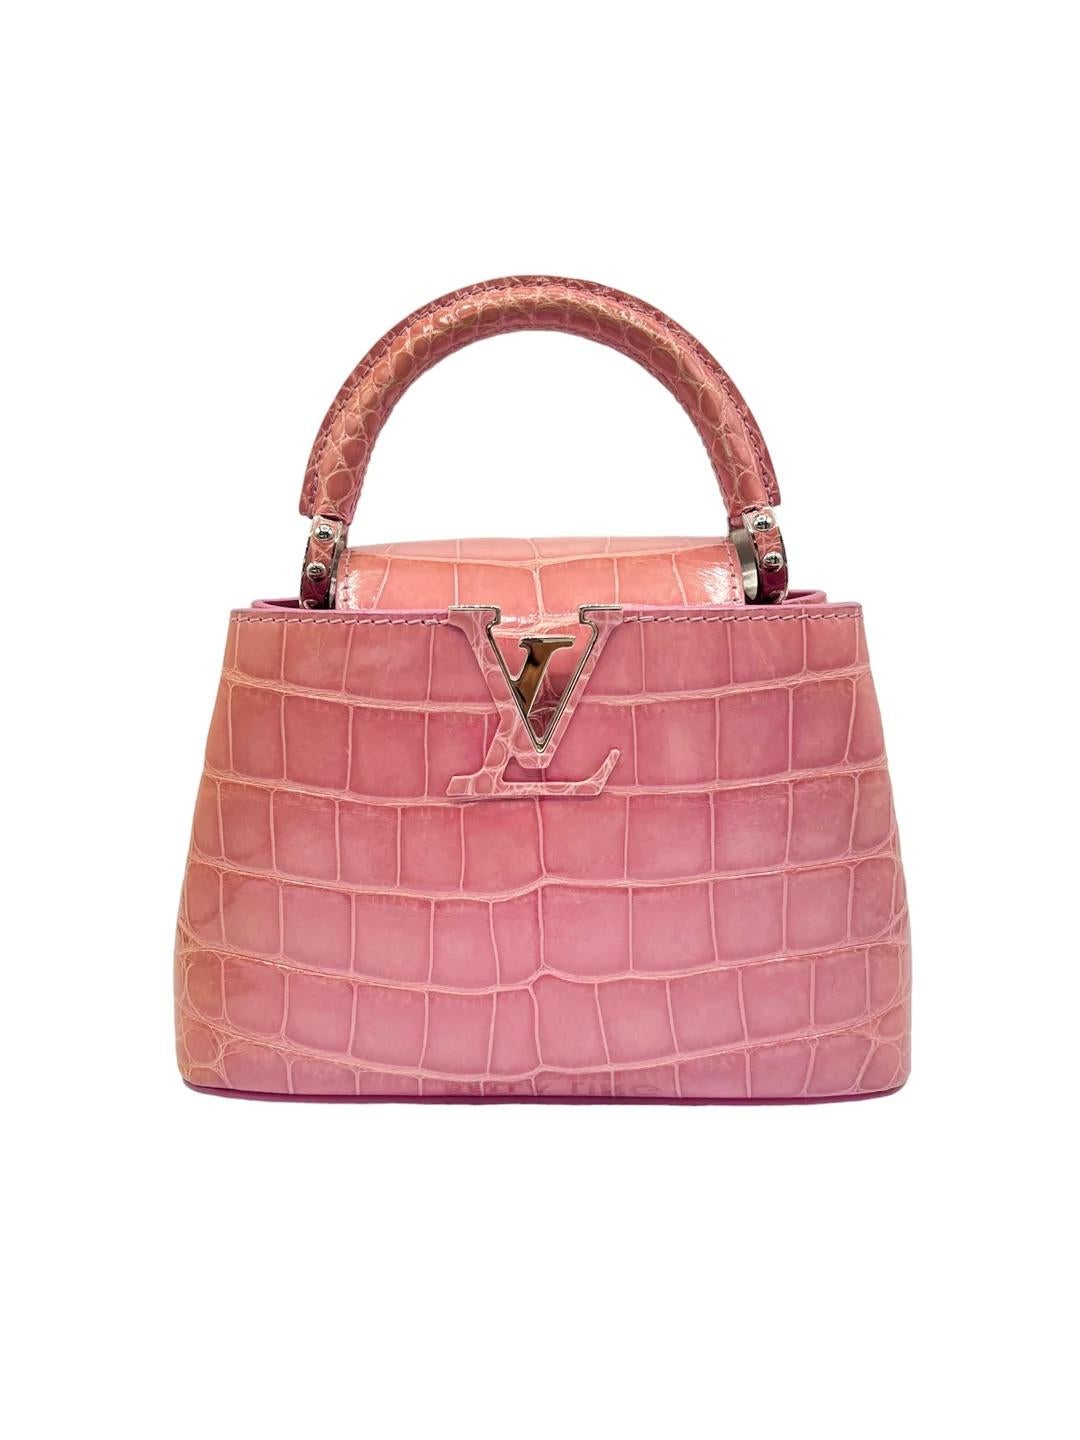 Louis Vuitton Capacines handbag in Pink Alligator   1